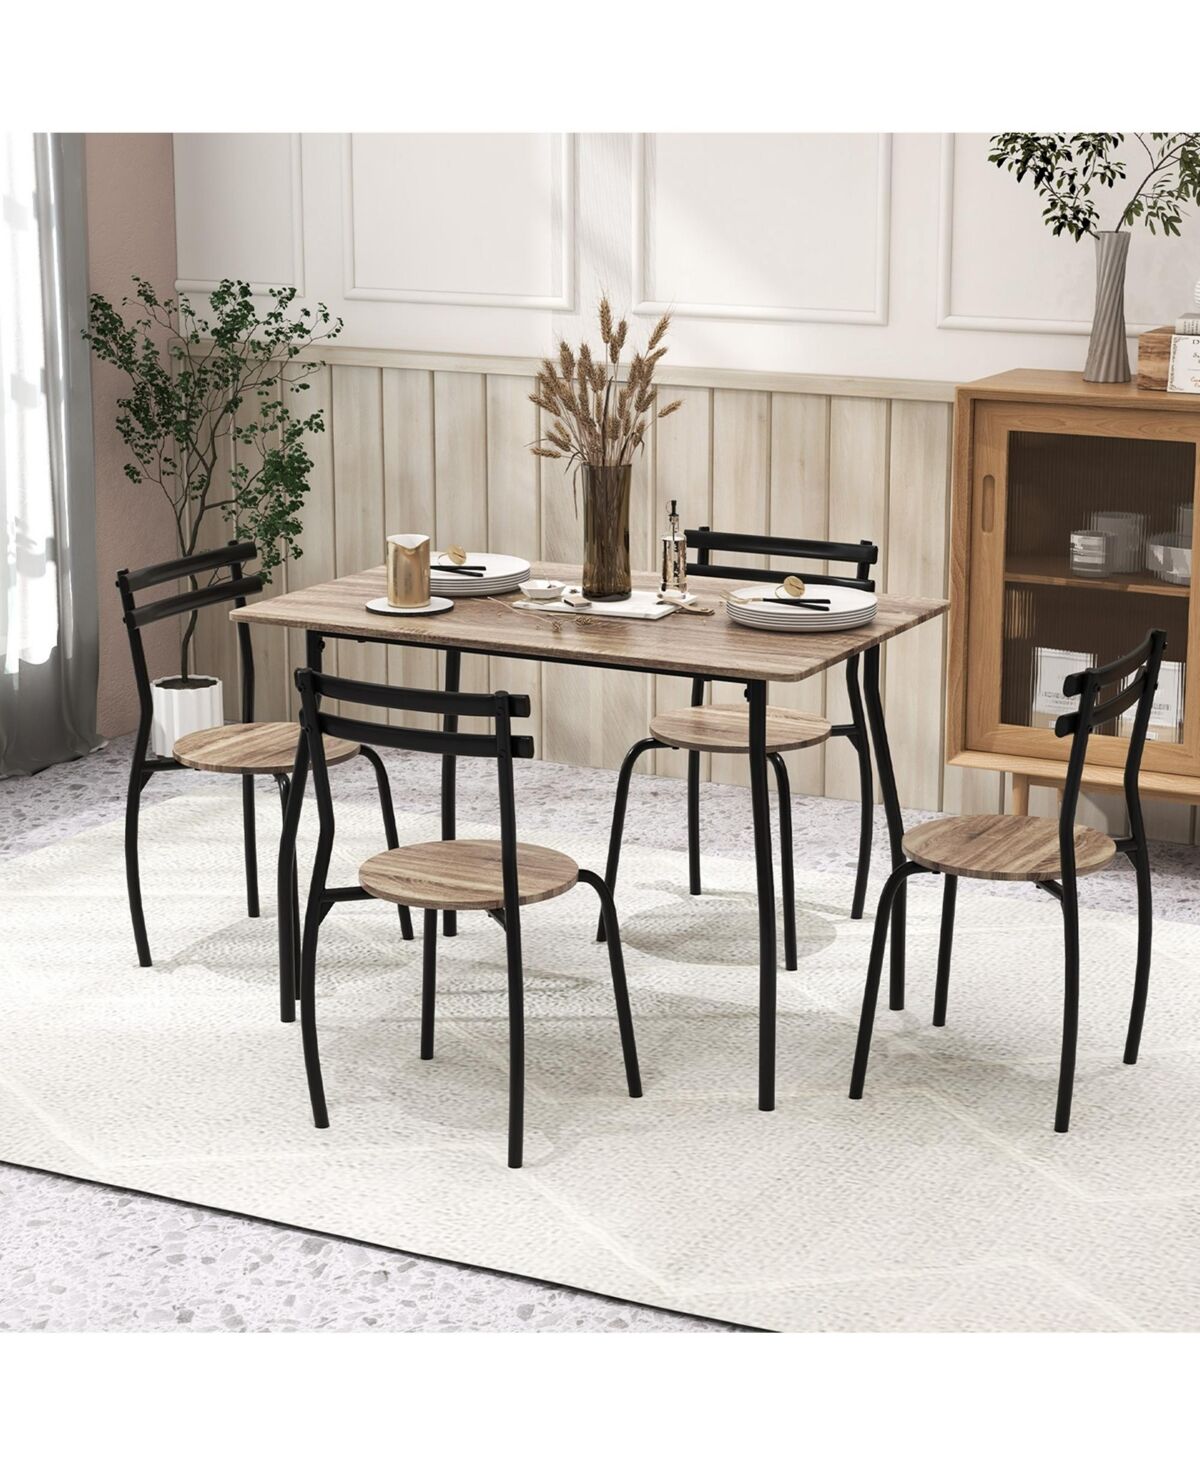 Costway 5PCS Dining Table Set 4 Chairs Wood & Metal Frame Space-saving Kitchen Furniture - Natural